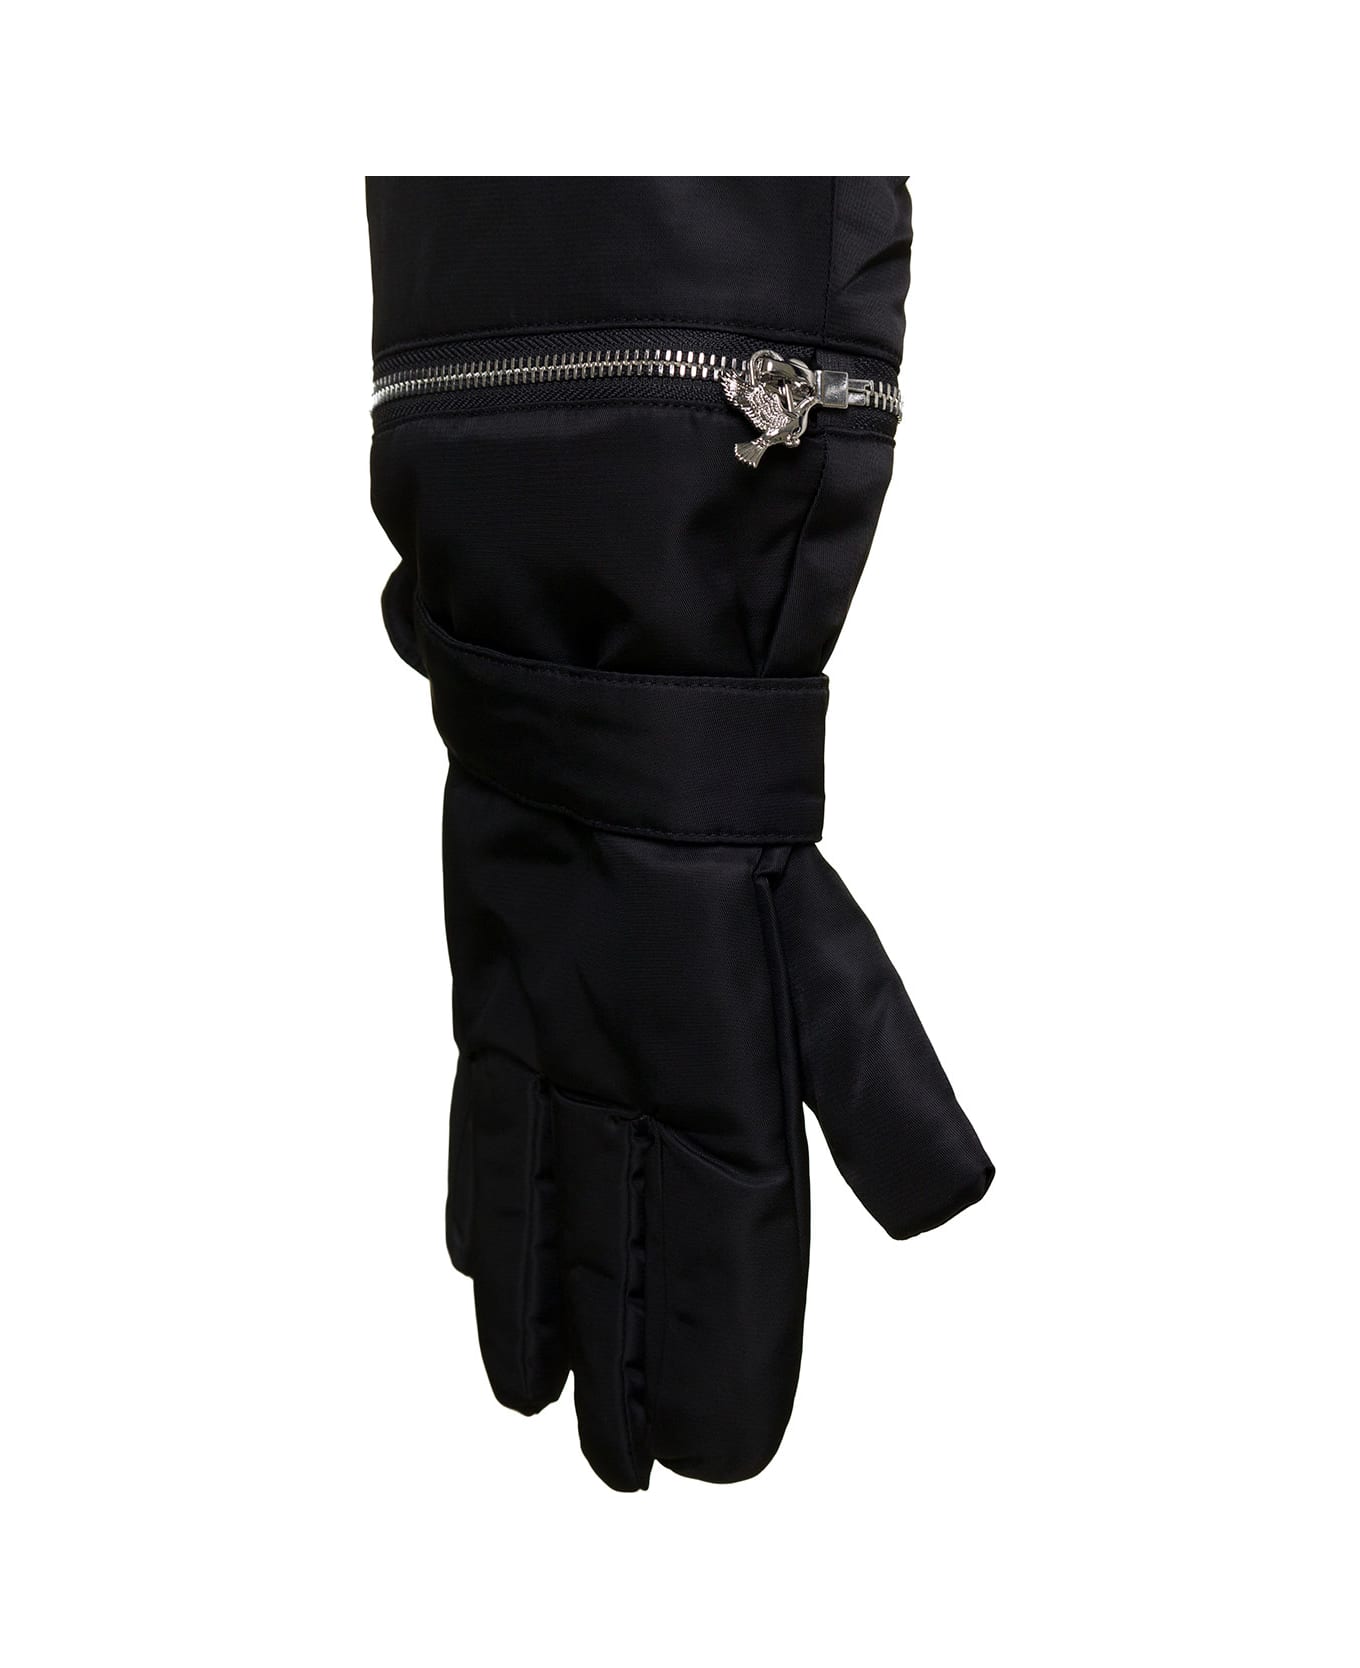 3.Paradis Nylon Bomber Jacket Gloves - Black